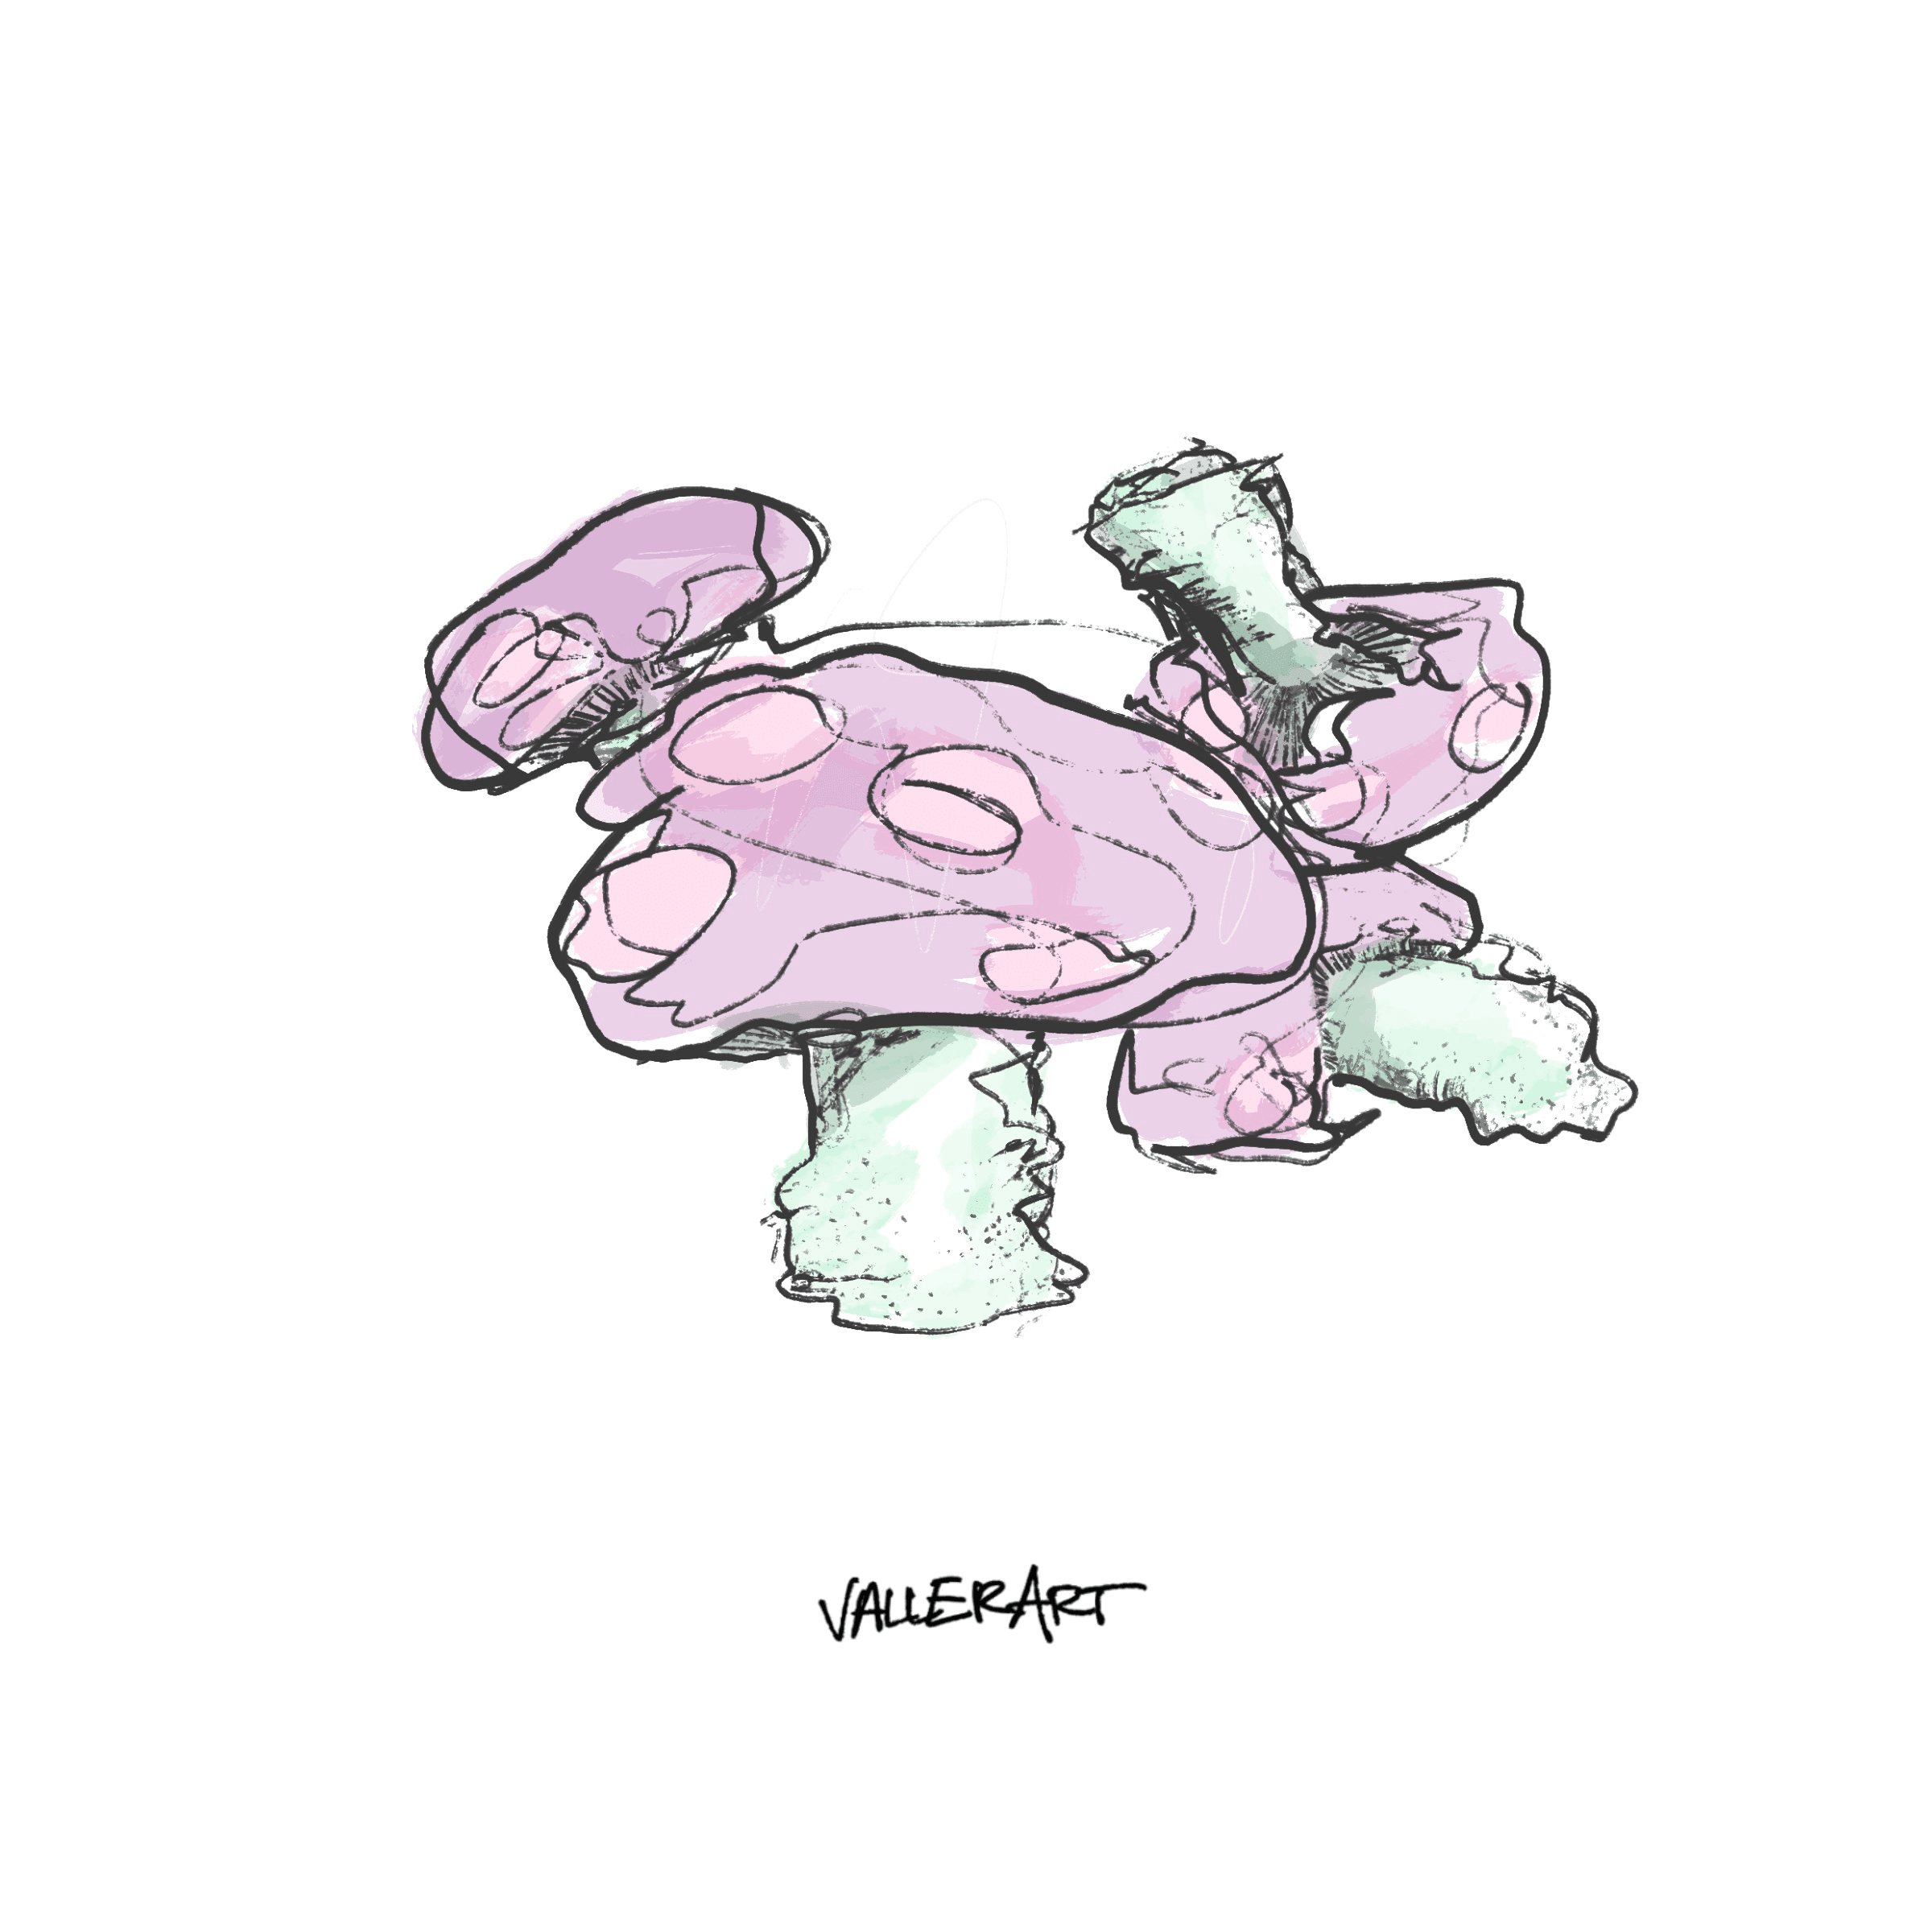 trippy shrooms 3 (purple)